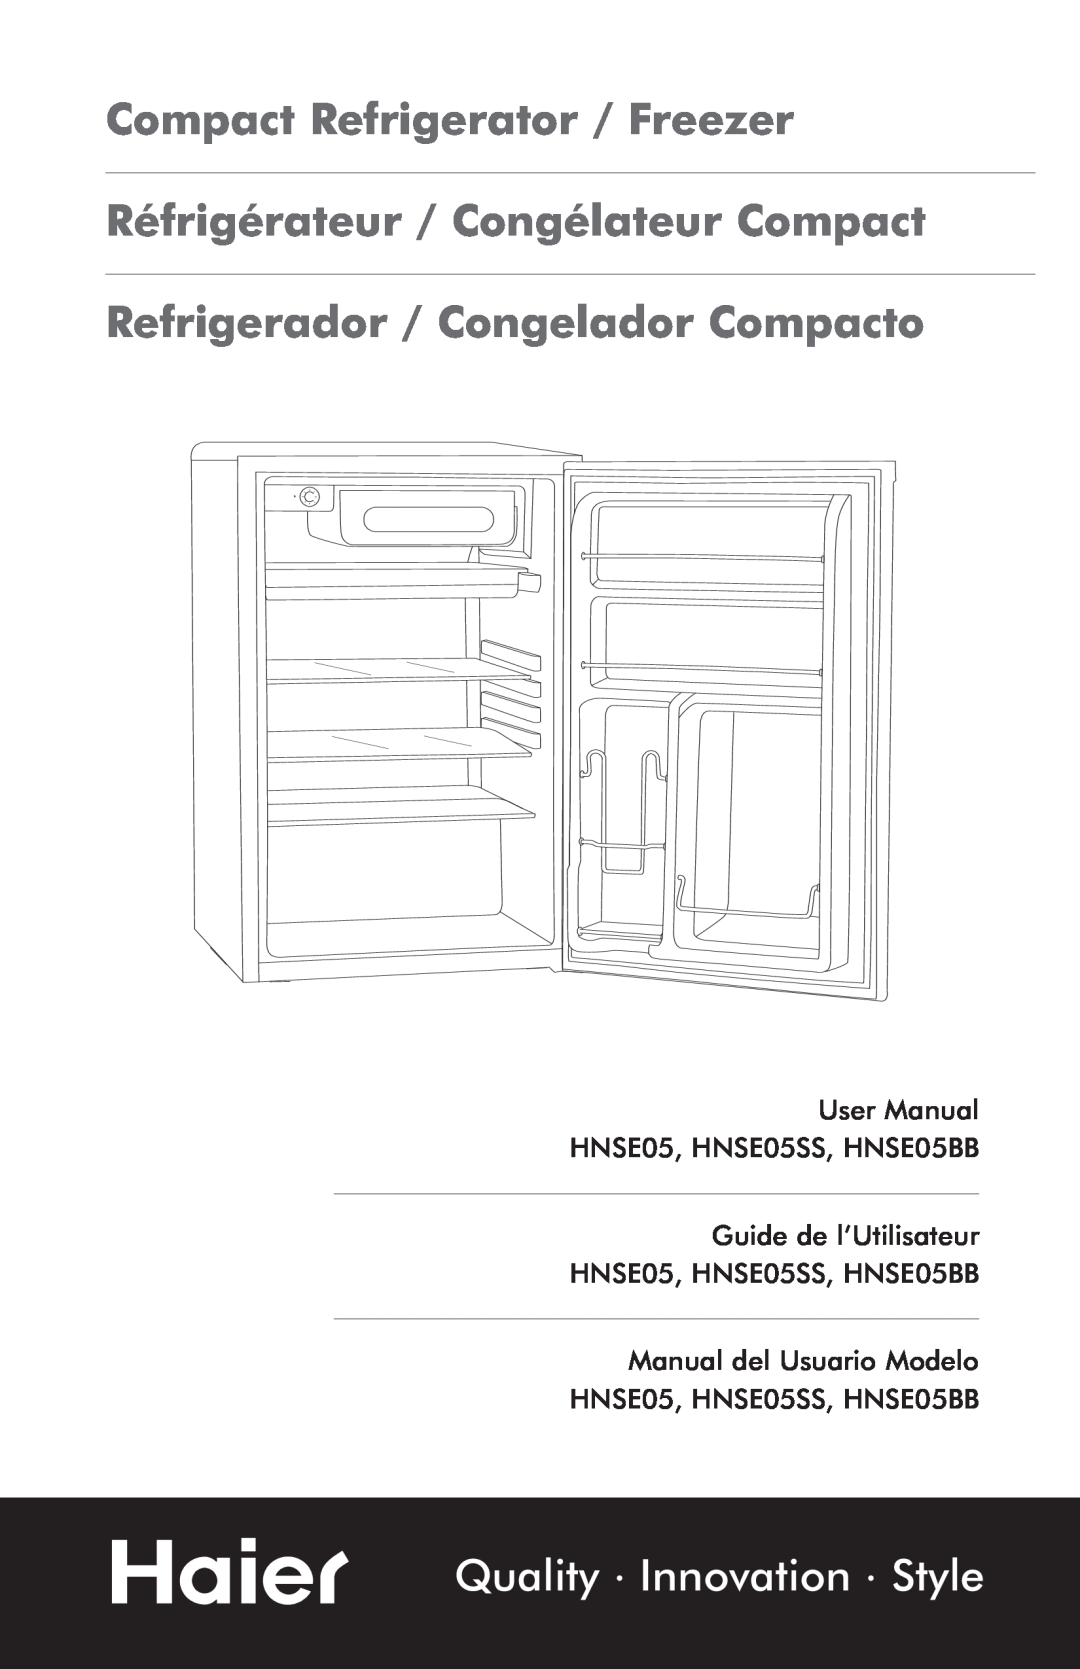 Haier HNSE05BB user manual Compact Refrigerator / Freezer, Réfrigérateur / Congélateur Compact, Quality Innovation Style 